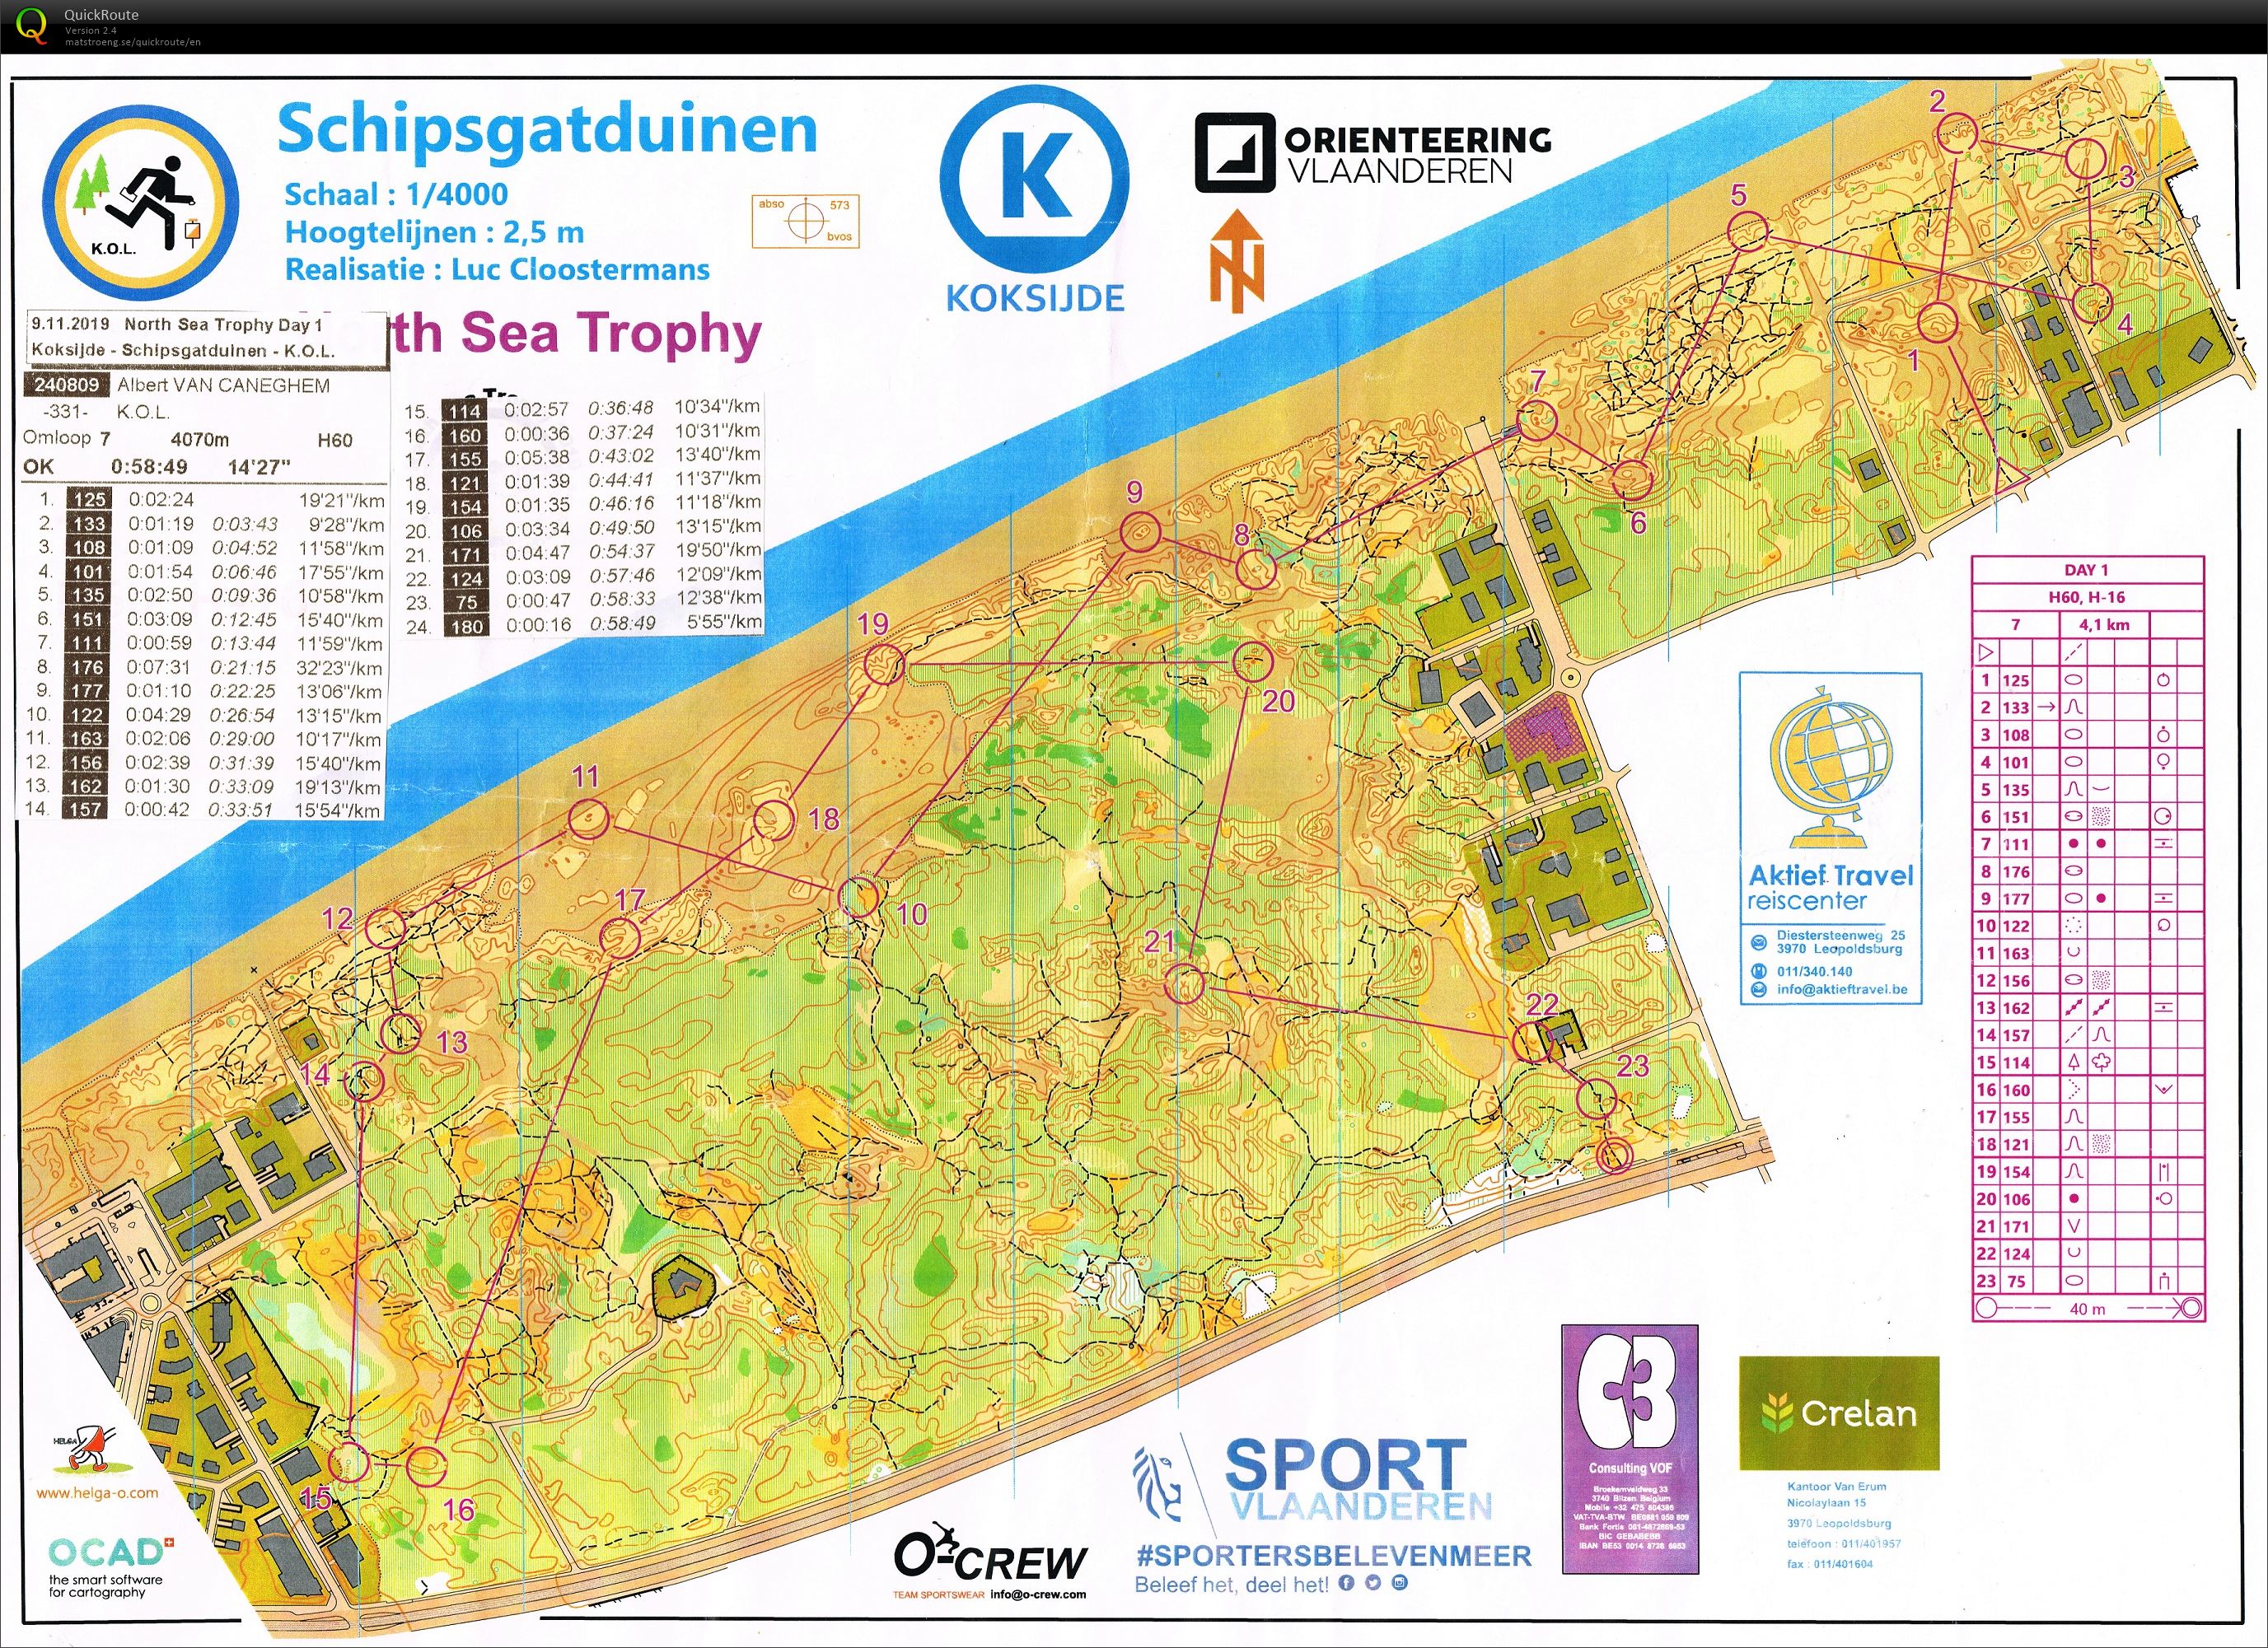 Schipsgatduinen North Sea Trophy D1 (09/11/2019)